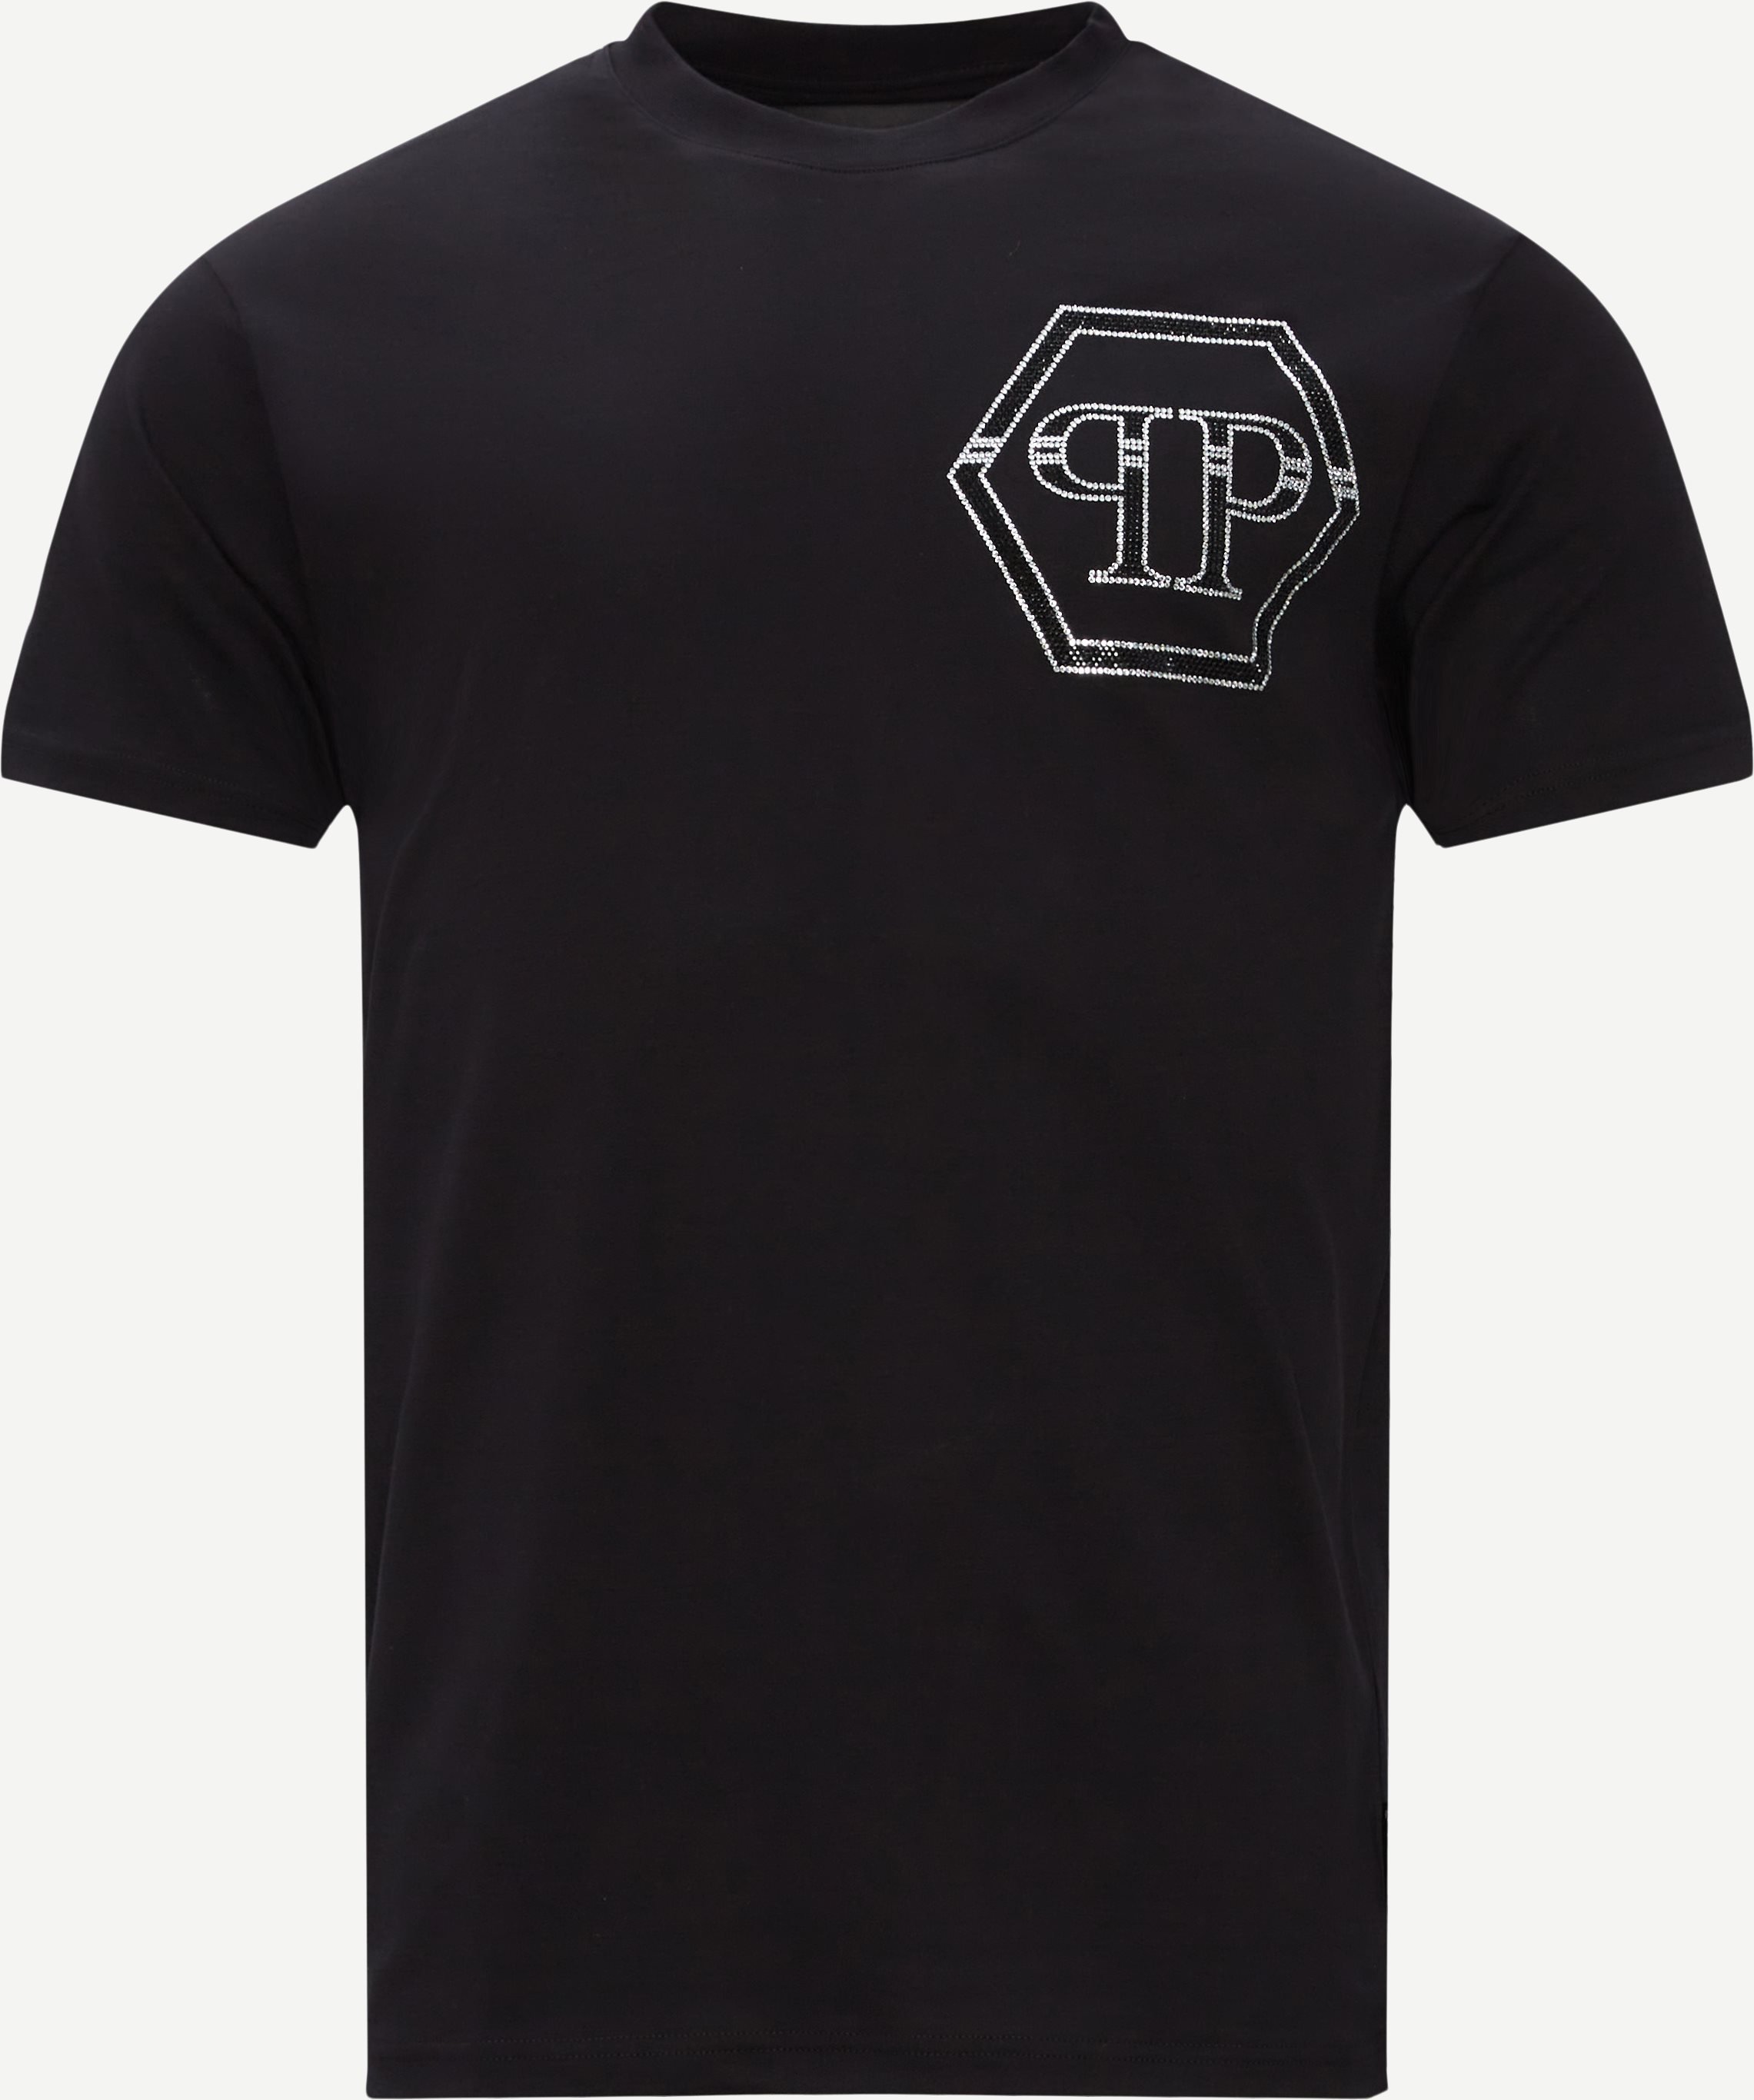 MTK5460 Hexagon Tee - T-shirts - Regular fit - Black